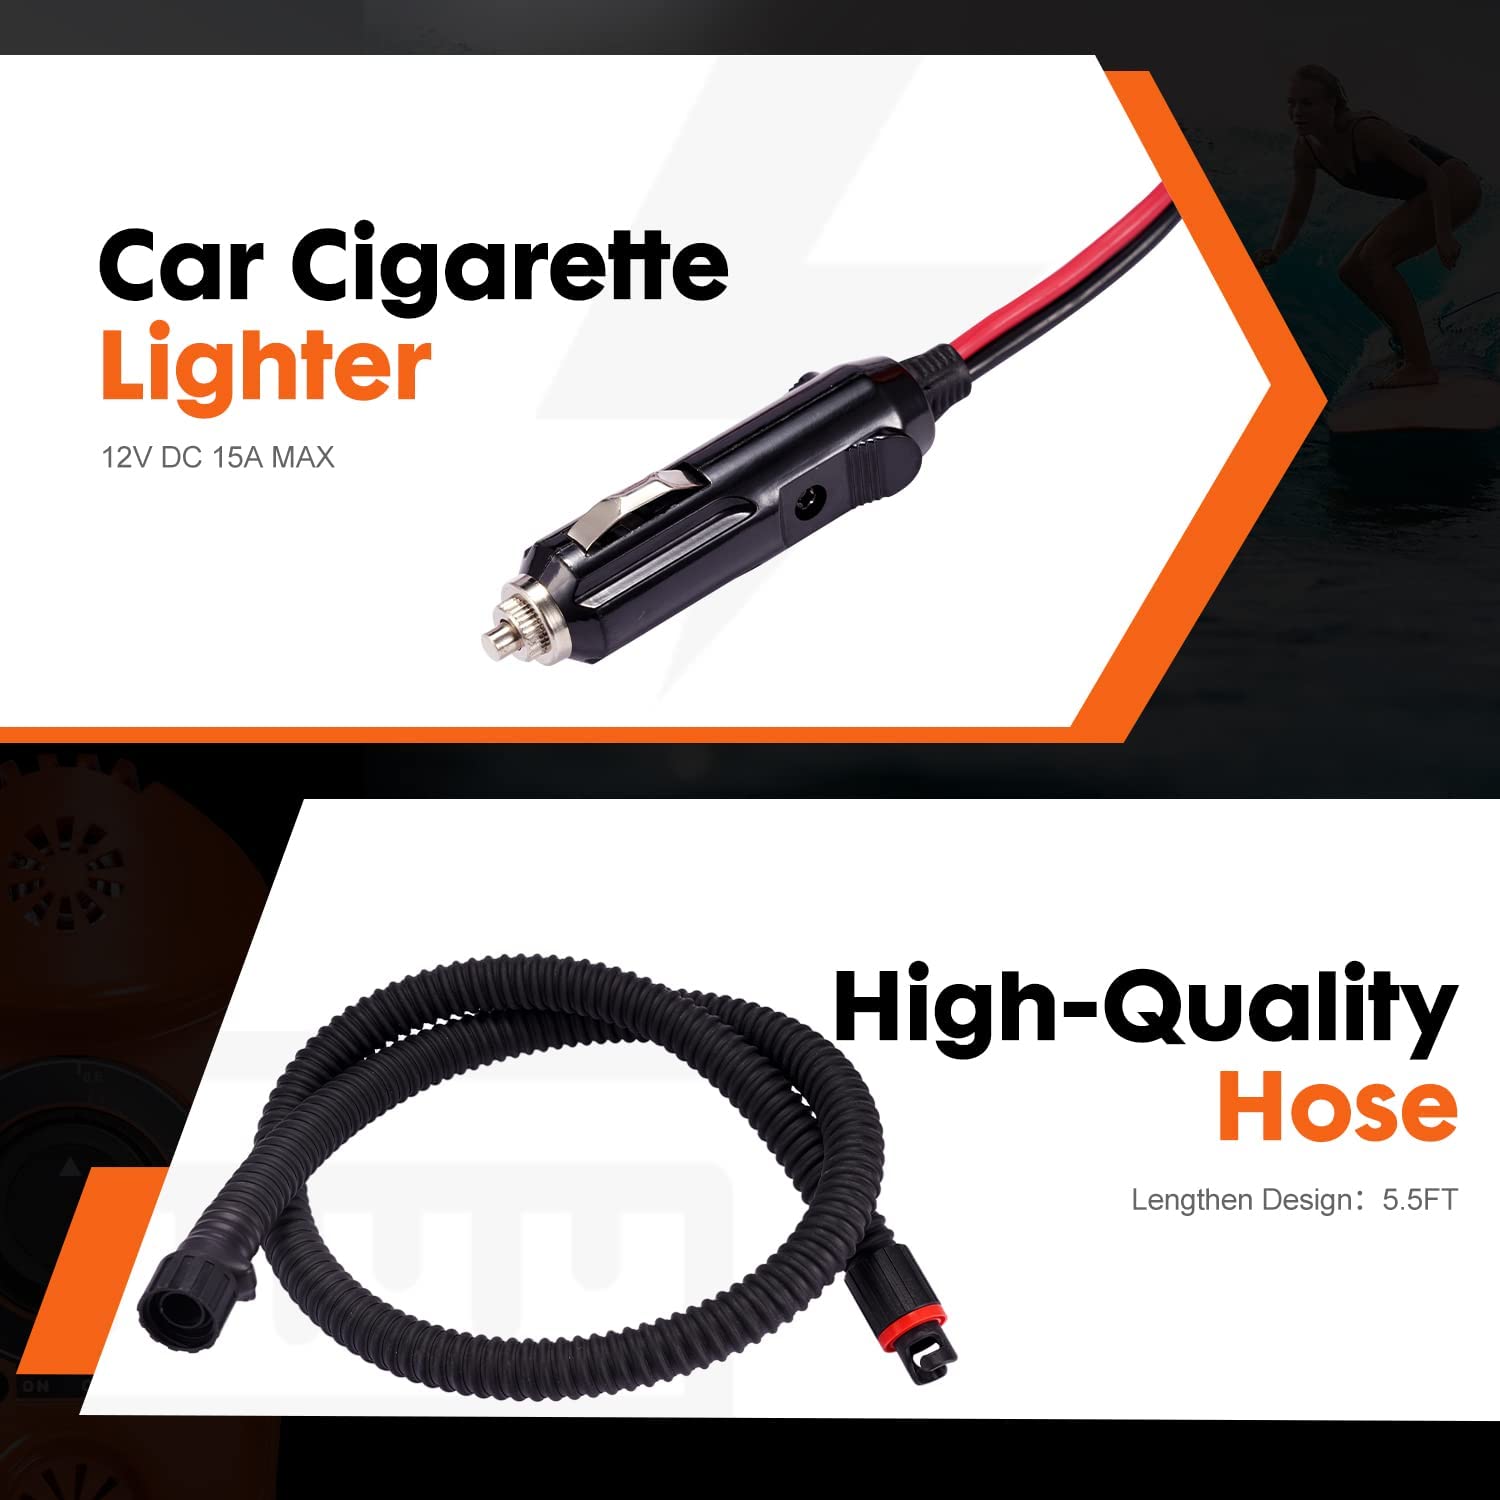 Paddle Board ‎Air Pump - Lighter Car Cigarette, High-Quality Hose